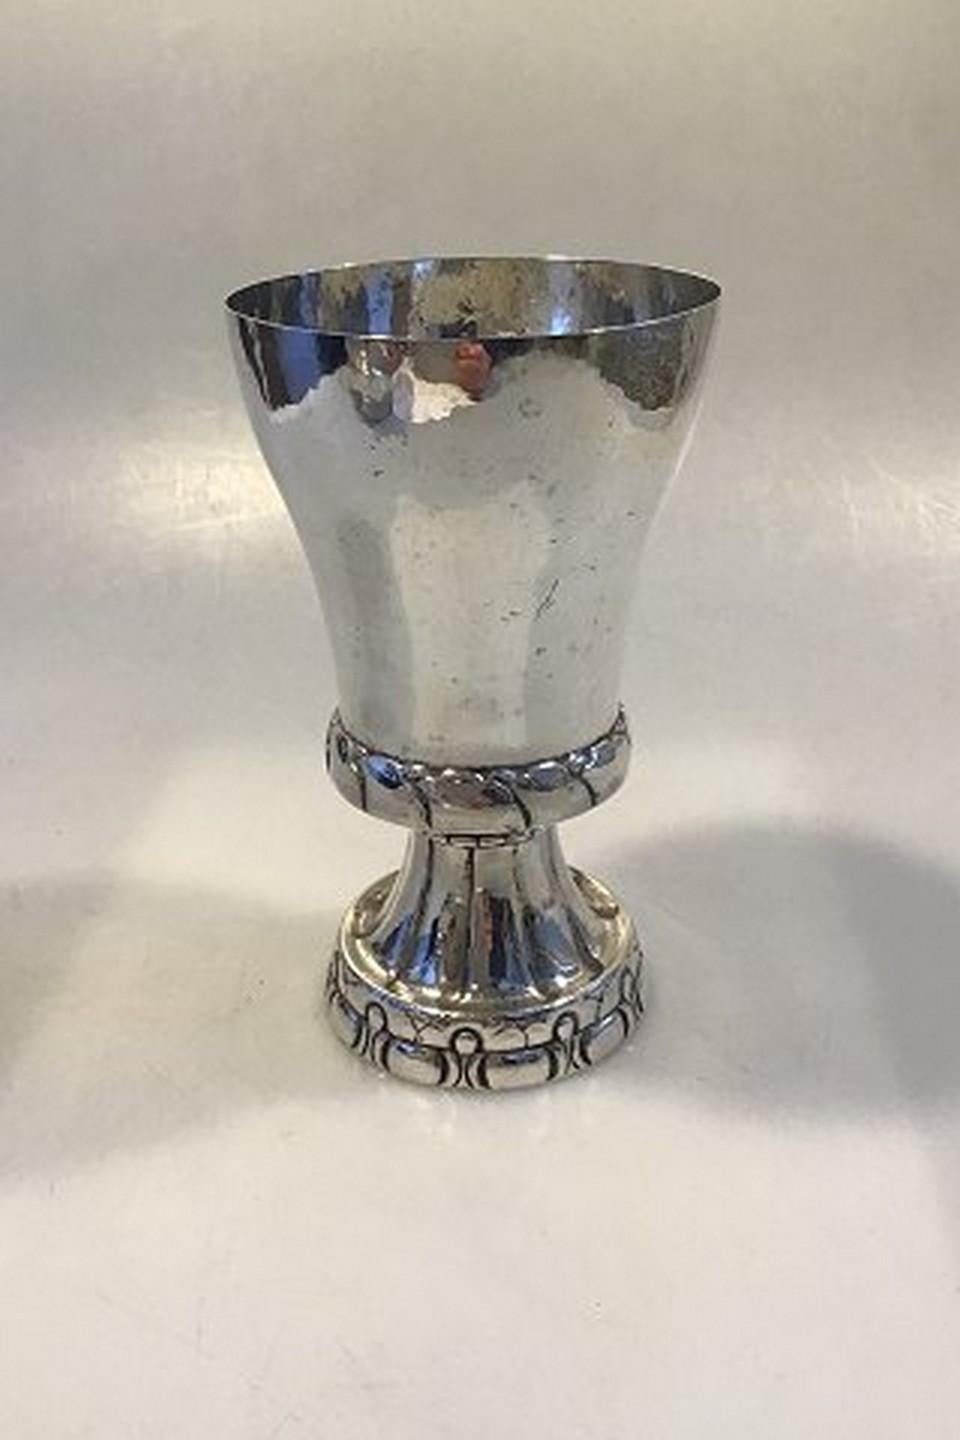 Georg Jensen silver Chalice/Goblet No 175 (1915-1927) Measures: Height 16.8 cm (6 39/64 in), diameter 9.8 cm (3 55/64 in) Weight 253.1 gr/8.92 oz
Item no.: 452439.